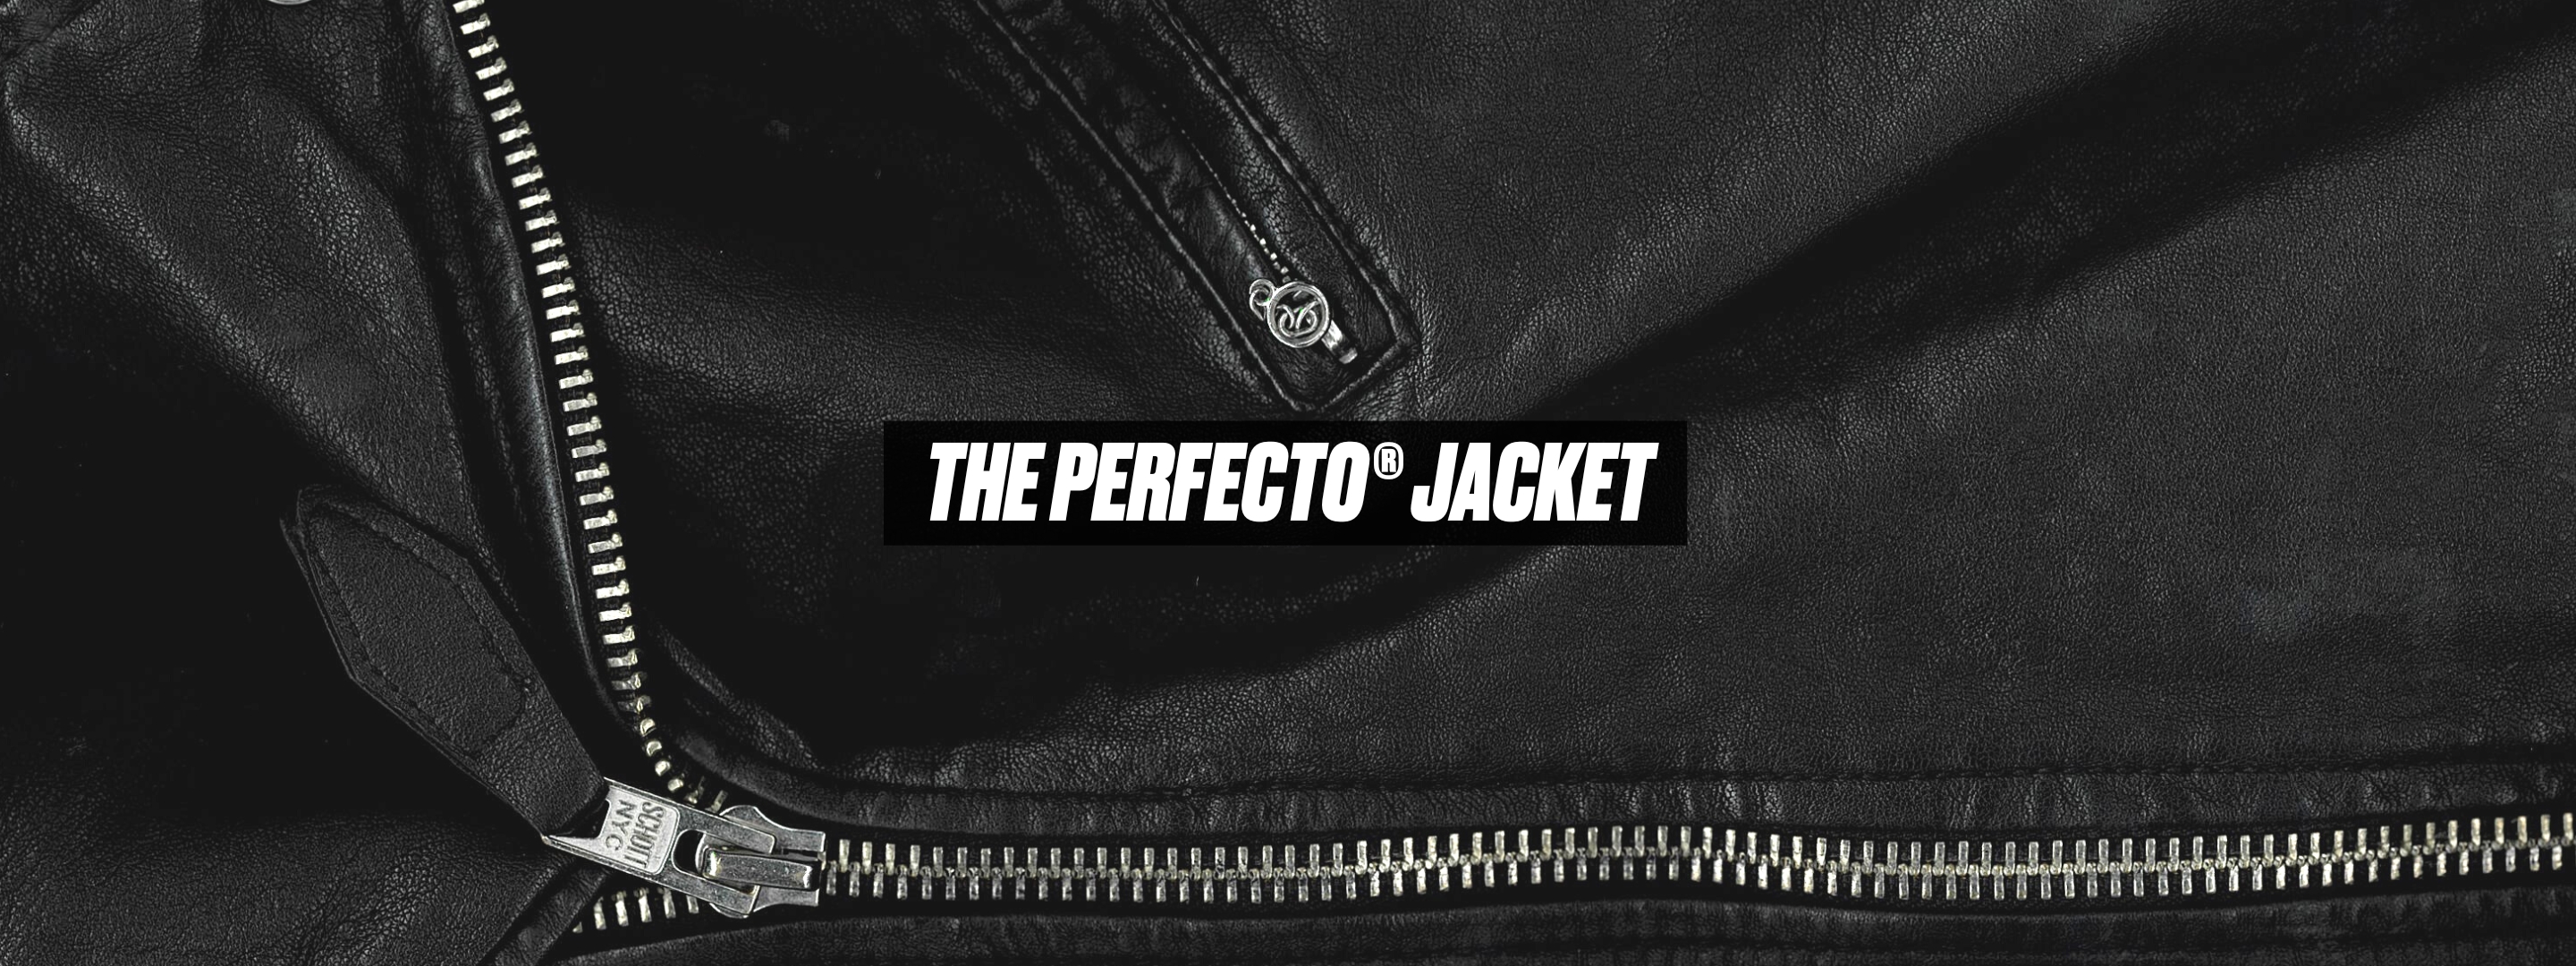 The Perfecto®​ jacket